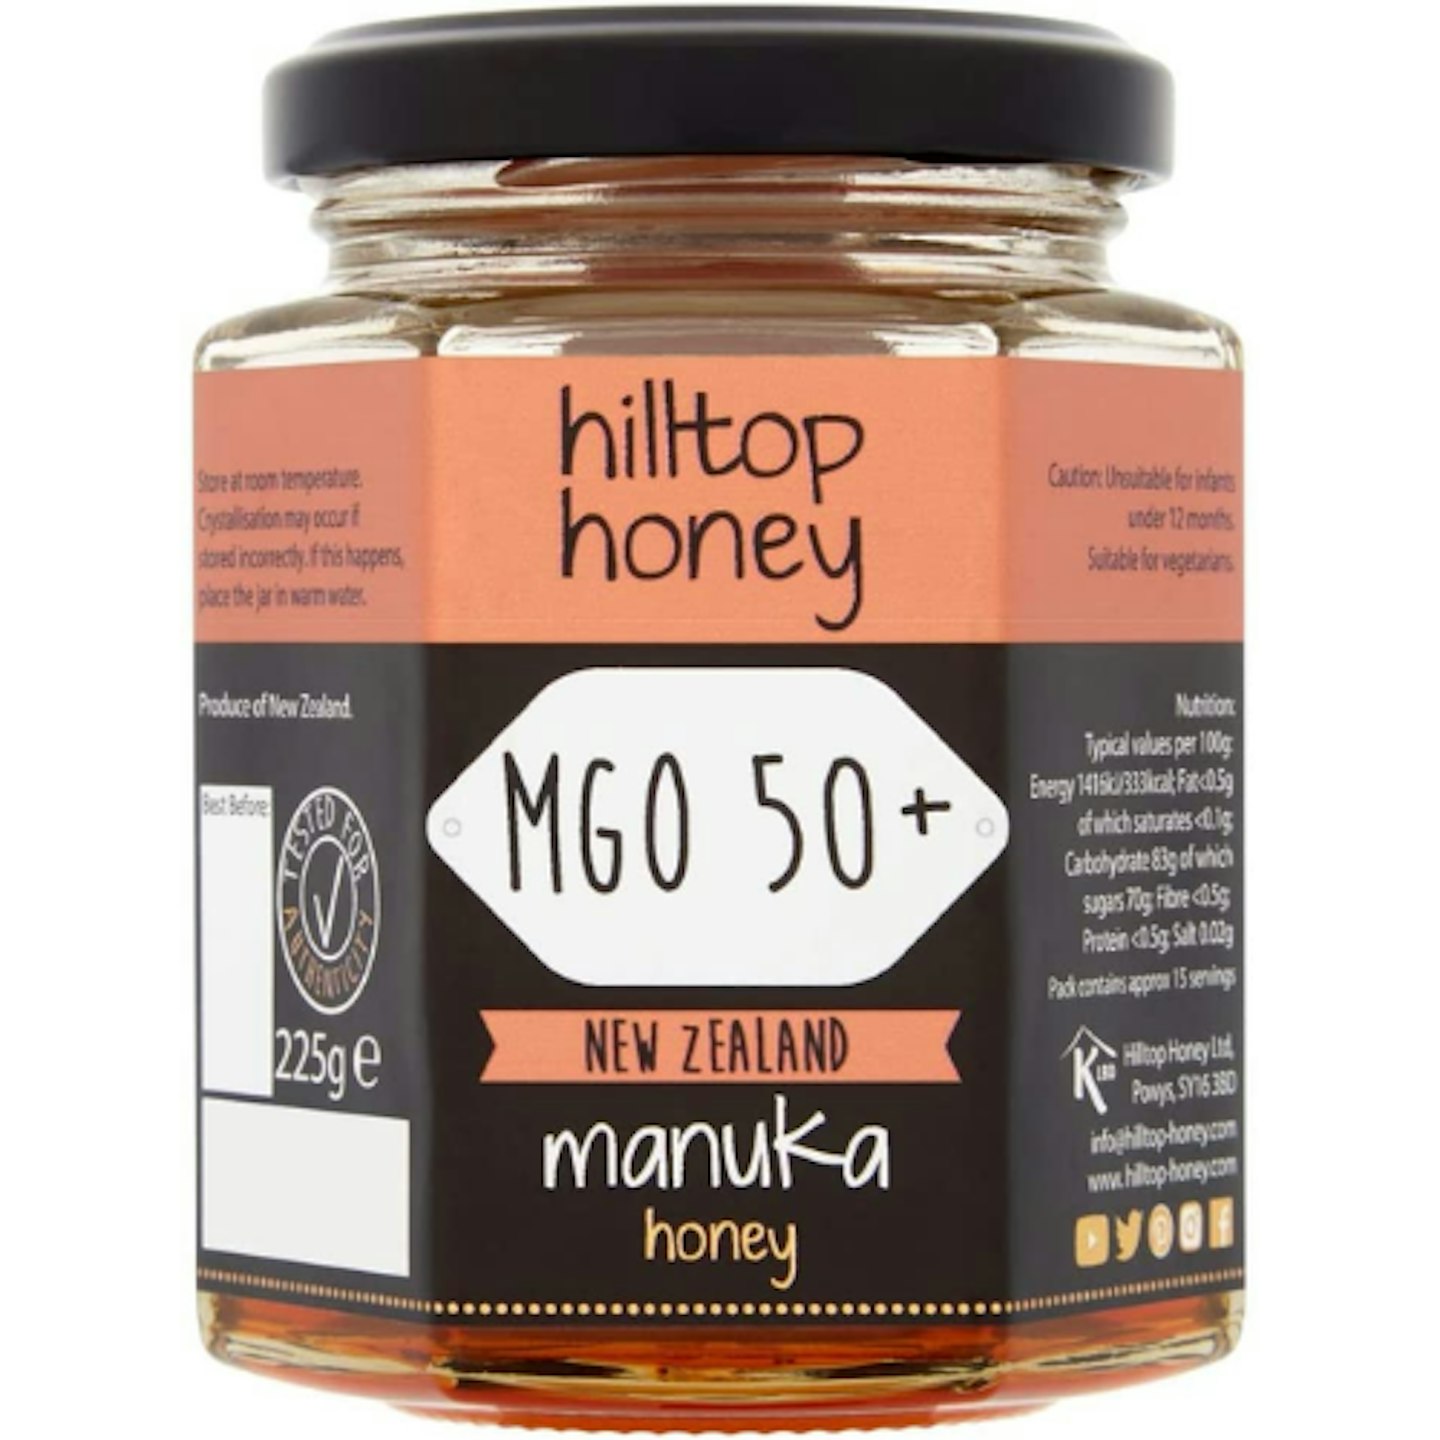 Hilltop Manuka MGO 50+ Honey Jar 225g